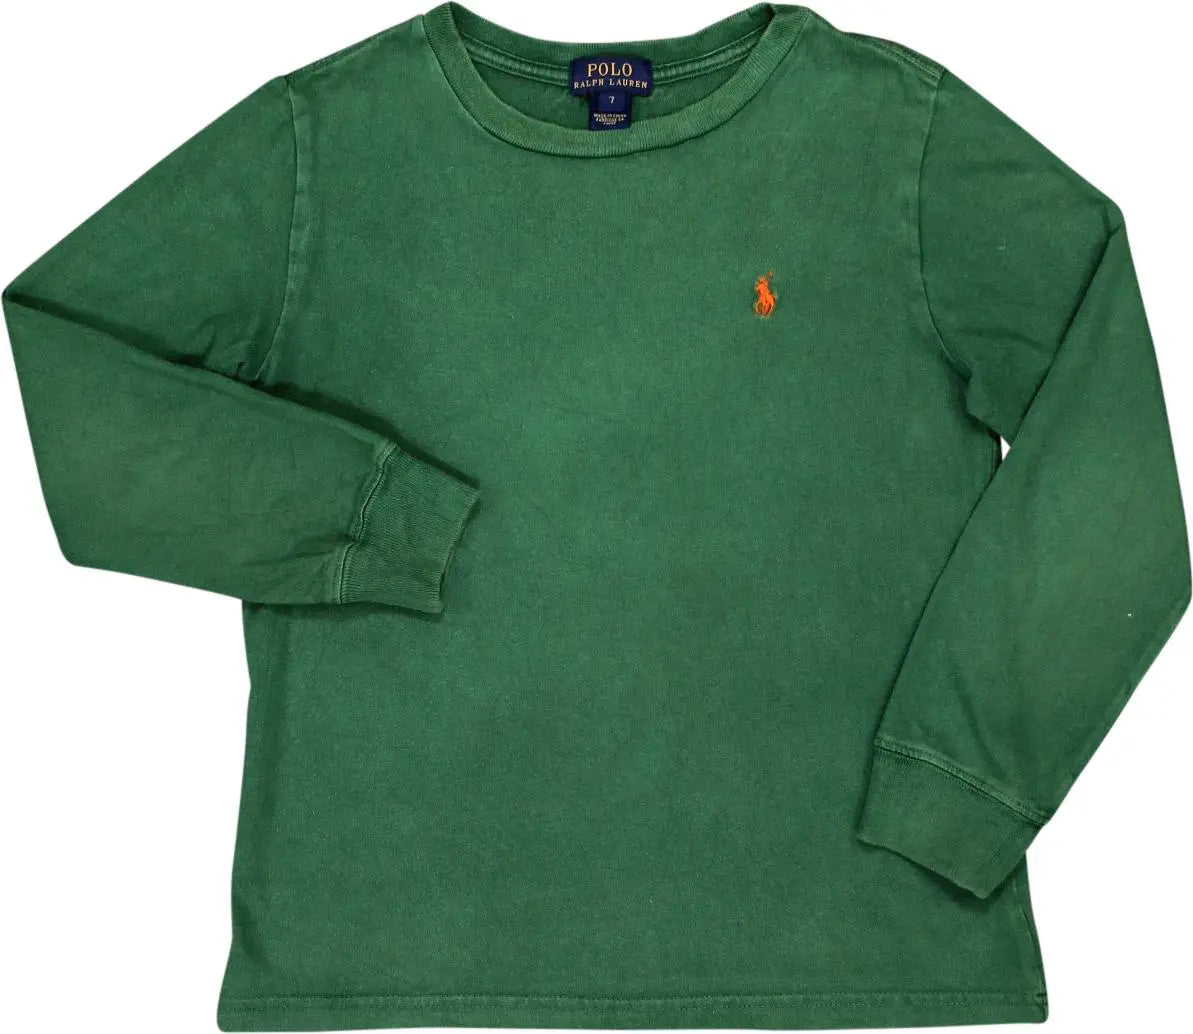 Ralph Lauren - Green Long Sleeve Shirt by Ralph Lauren- ThriftTale.com - Vintage and second handclothing